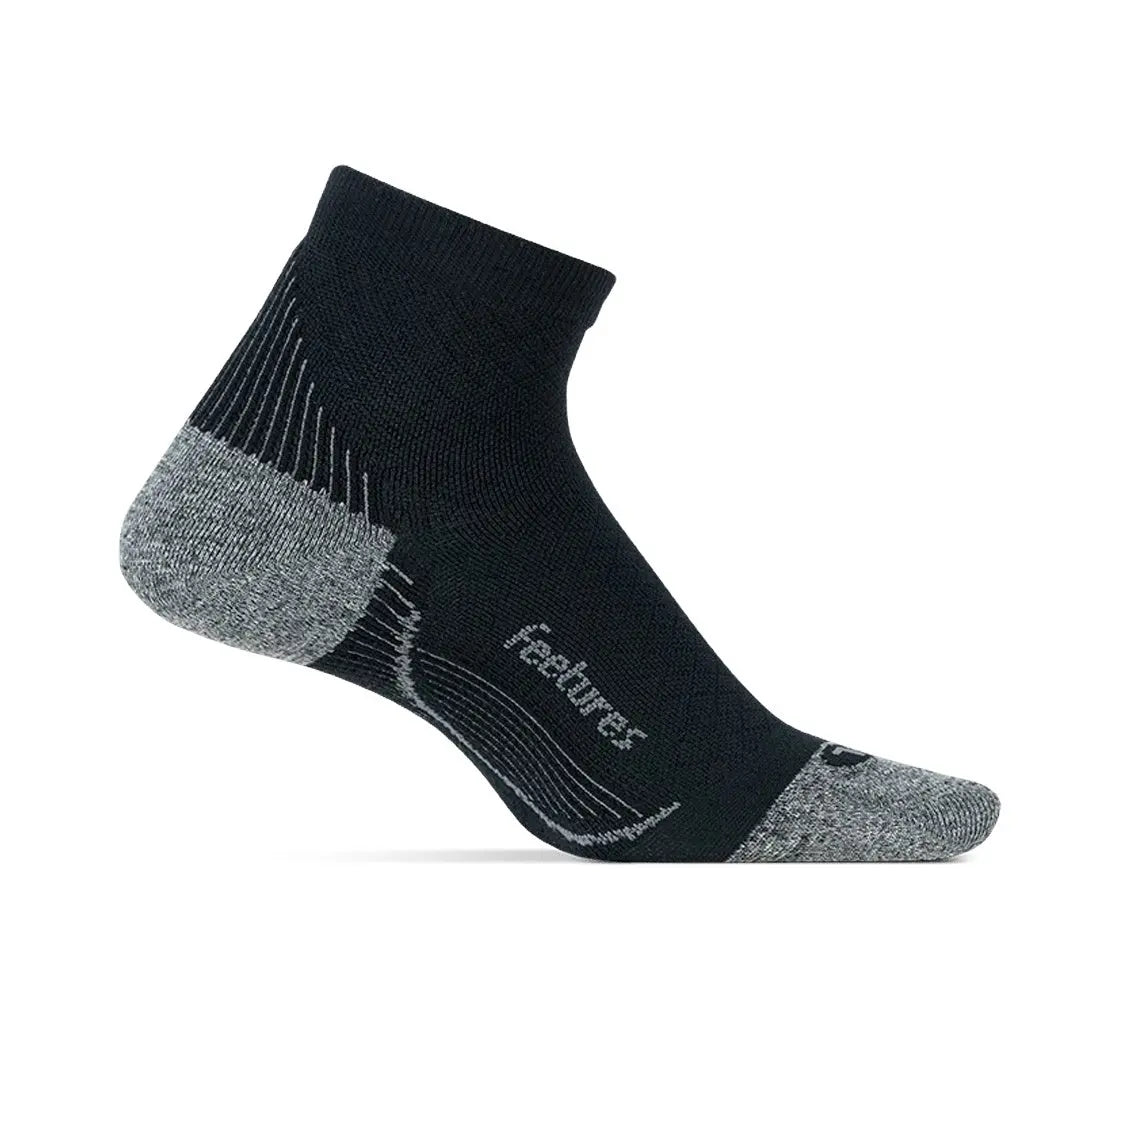 Feetures Plantar Fasciitis UltraLight Compression Sock Quarter - Black